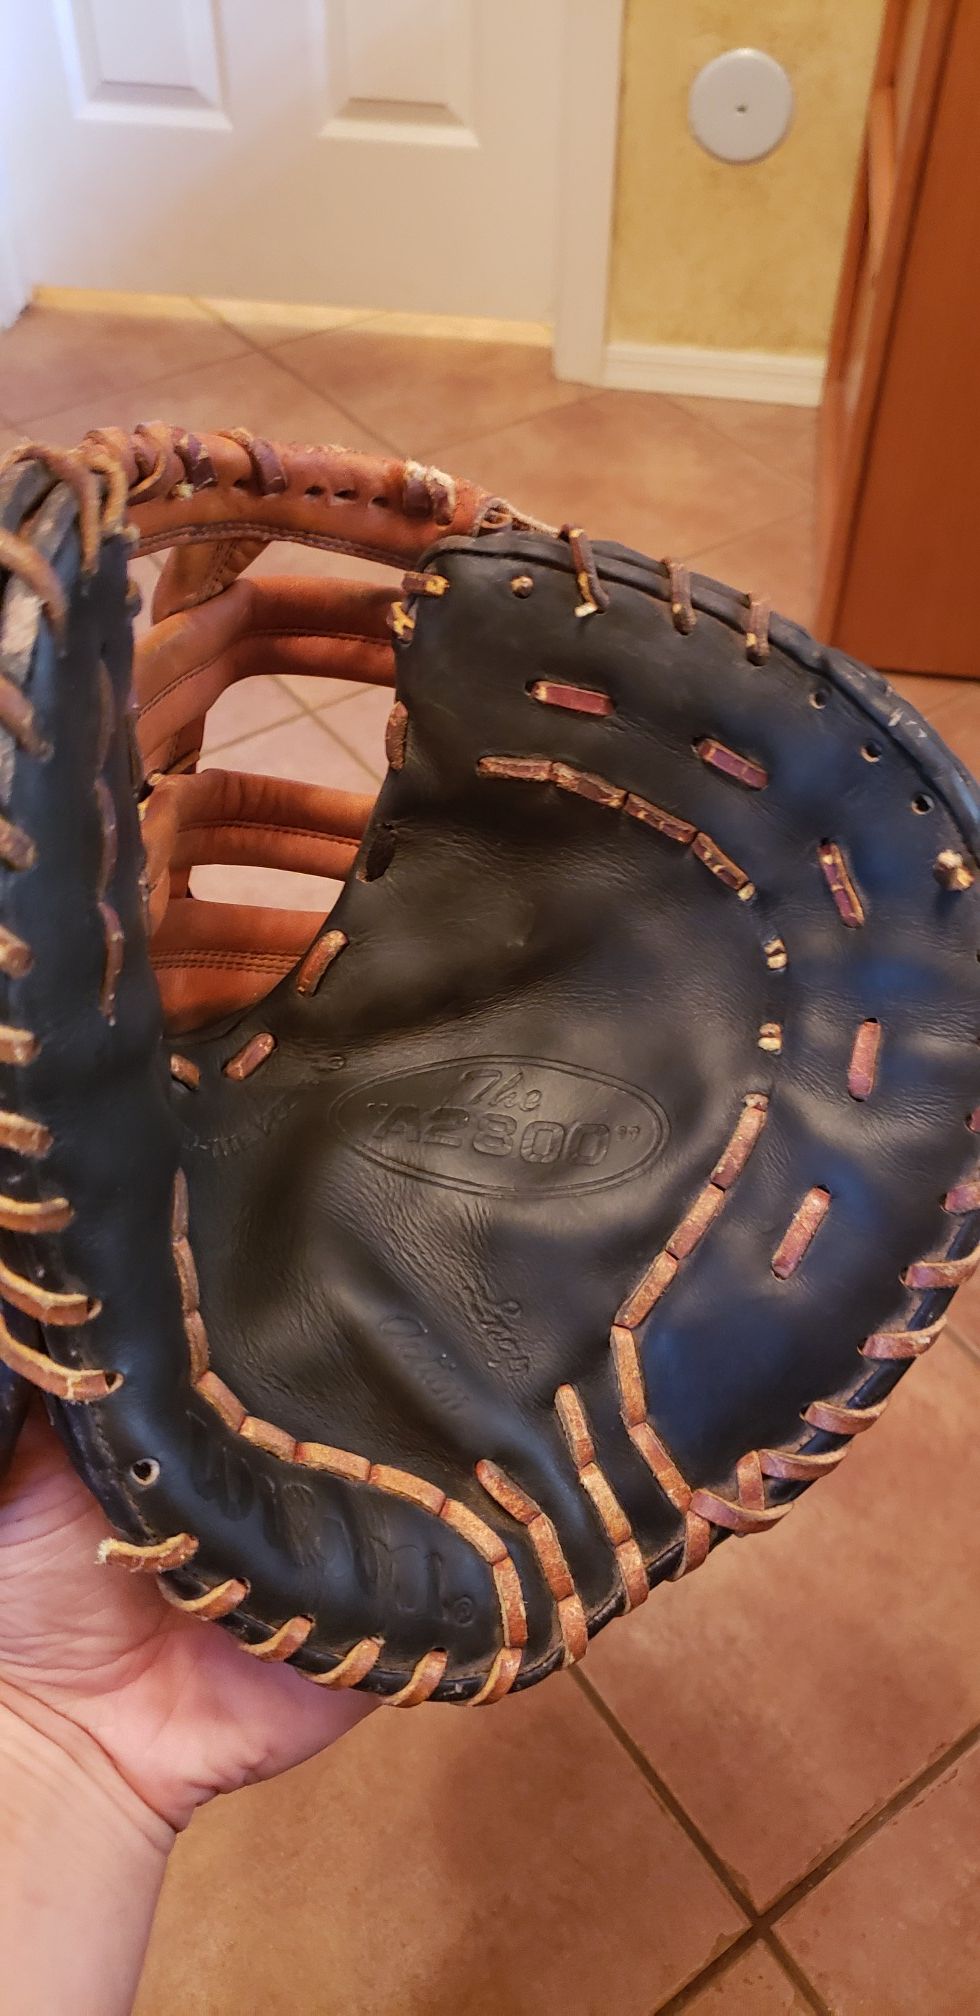 Wilson A2800 Firstbase glove